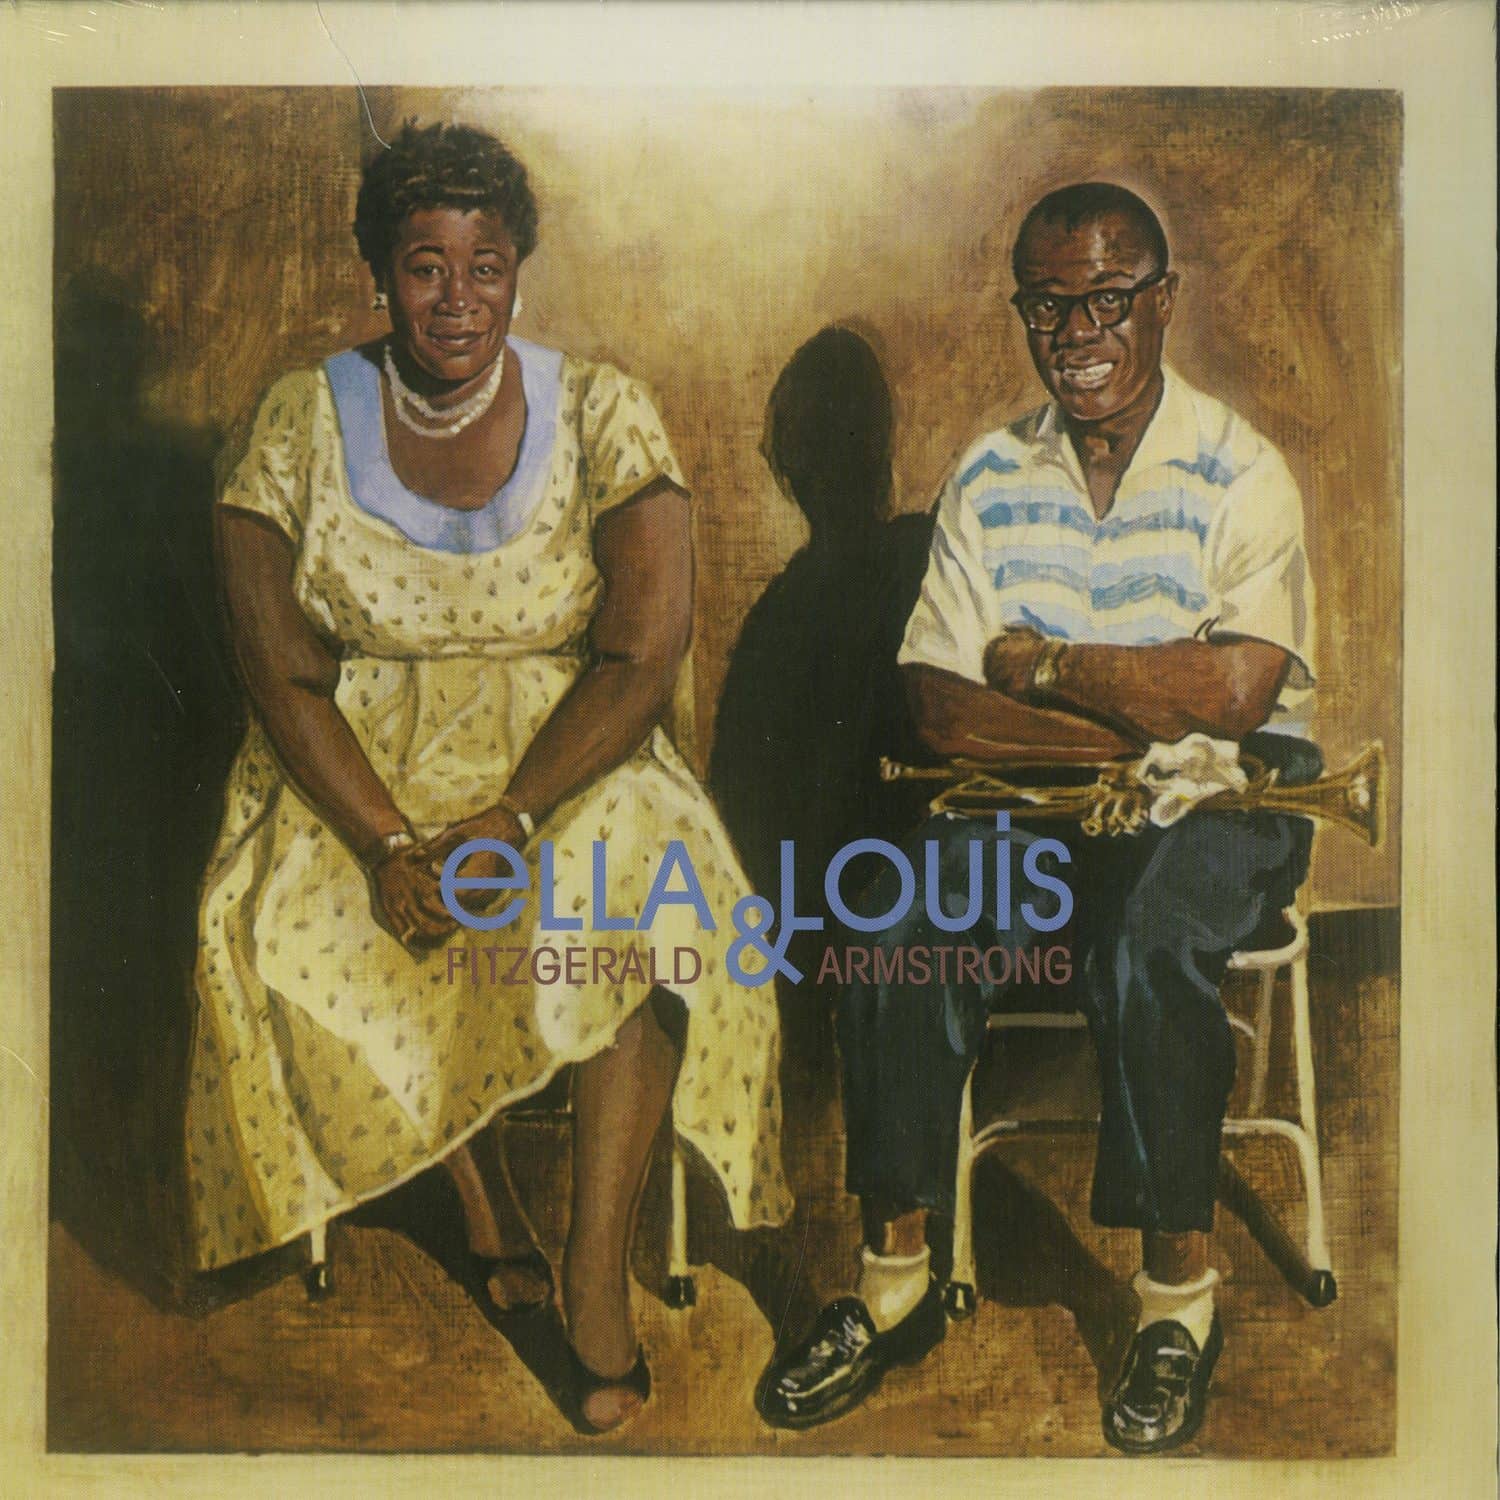 Ella Fitzgerald & Louis Armstrong - ELLA & LOUIS 